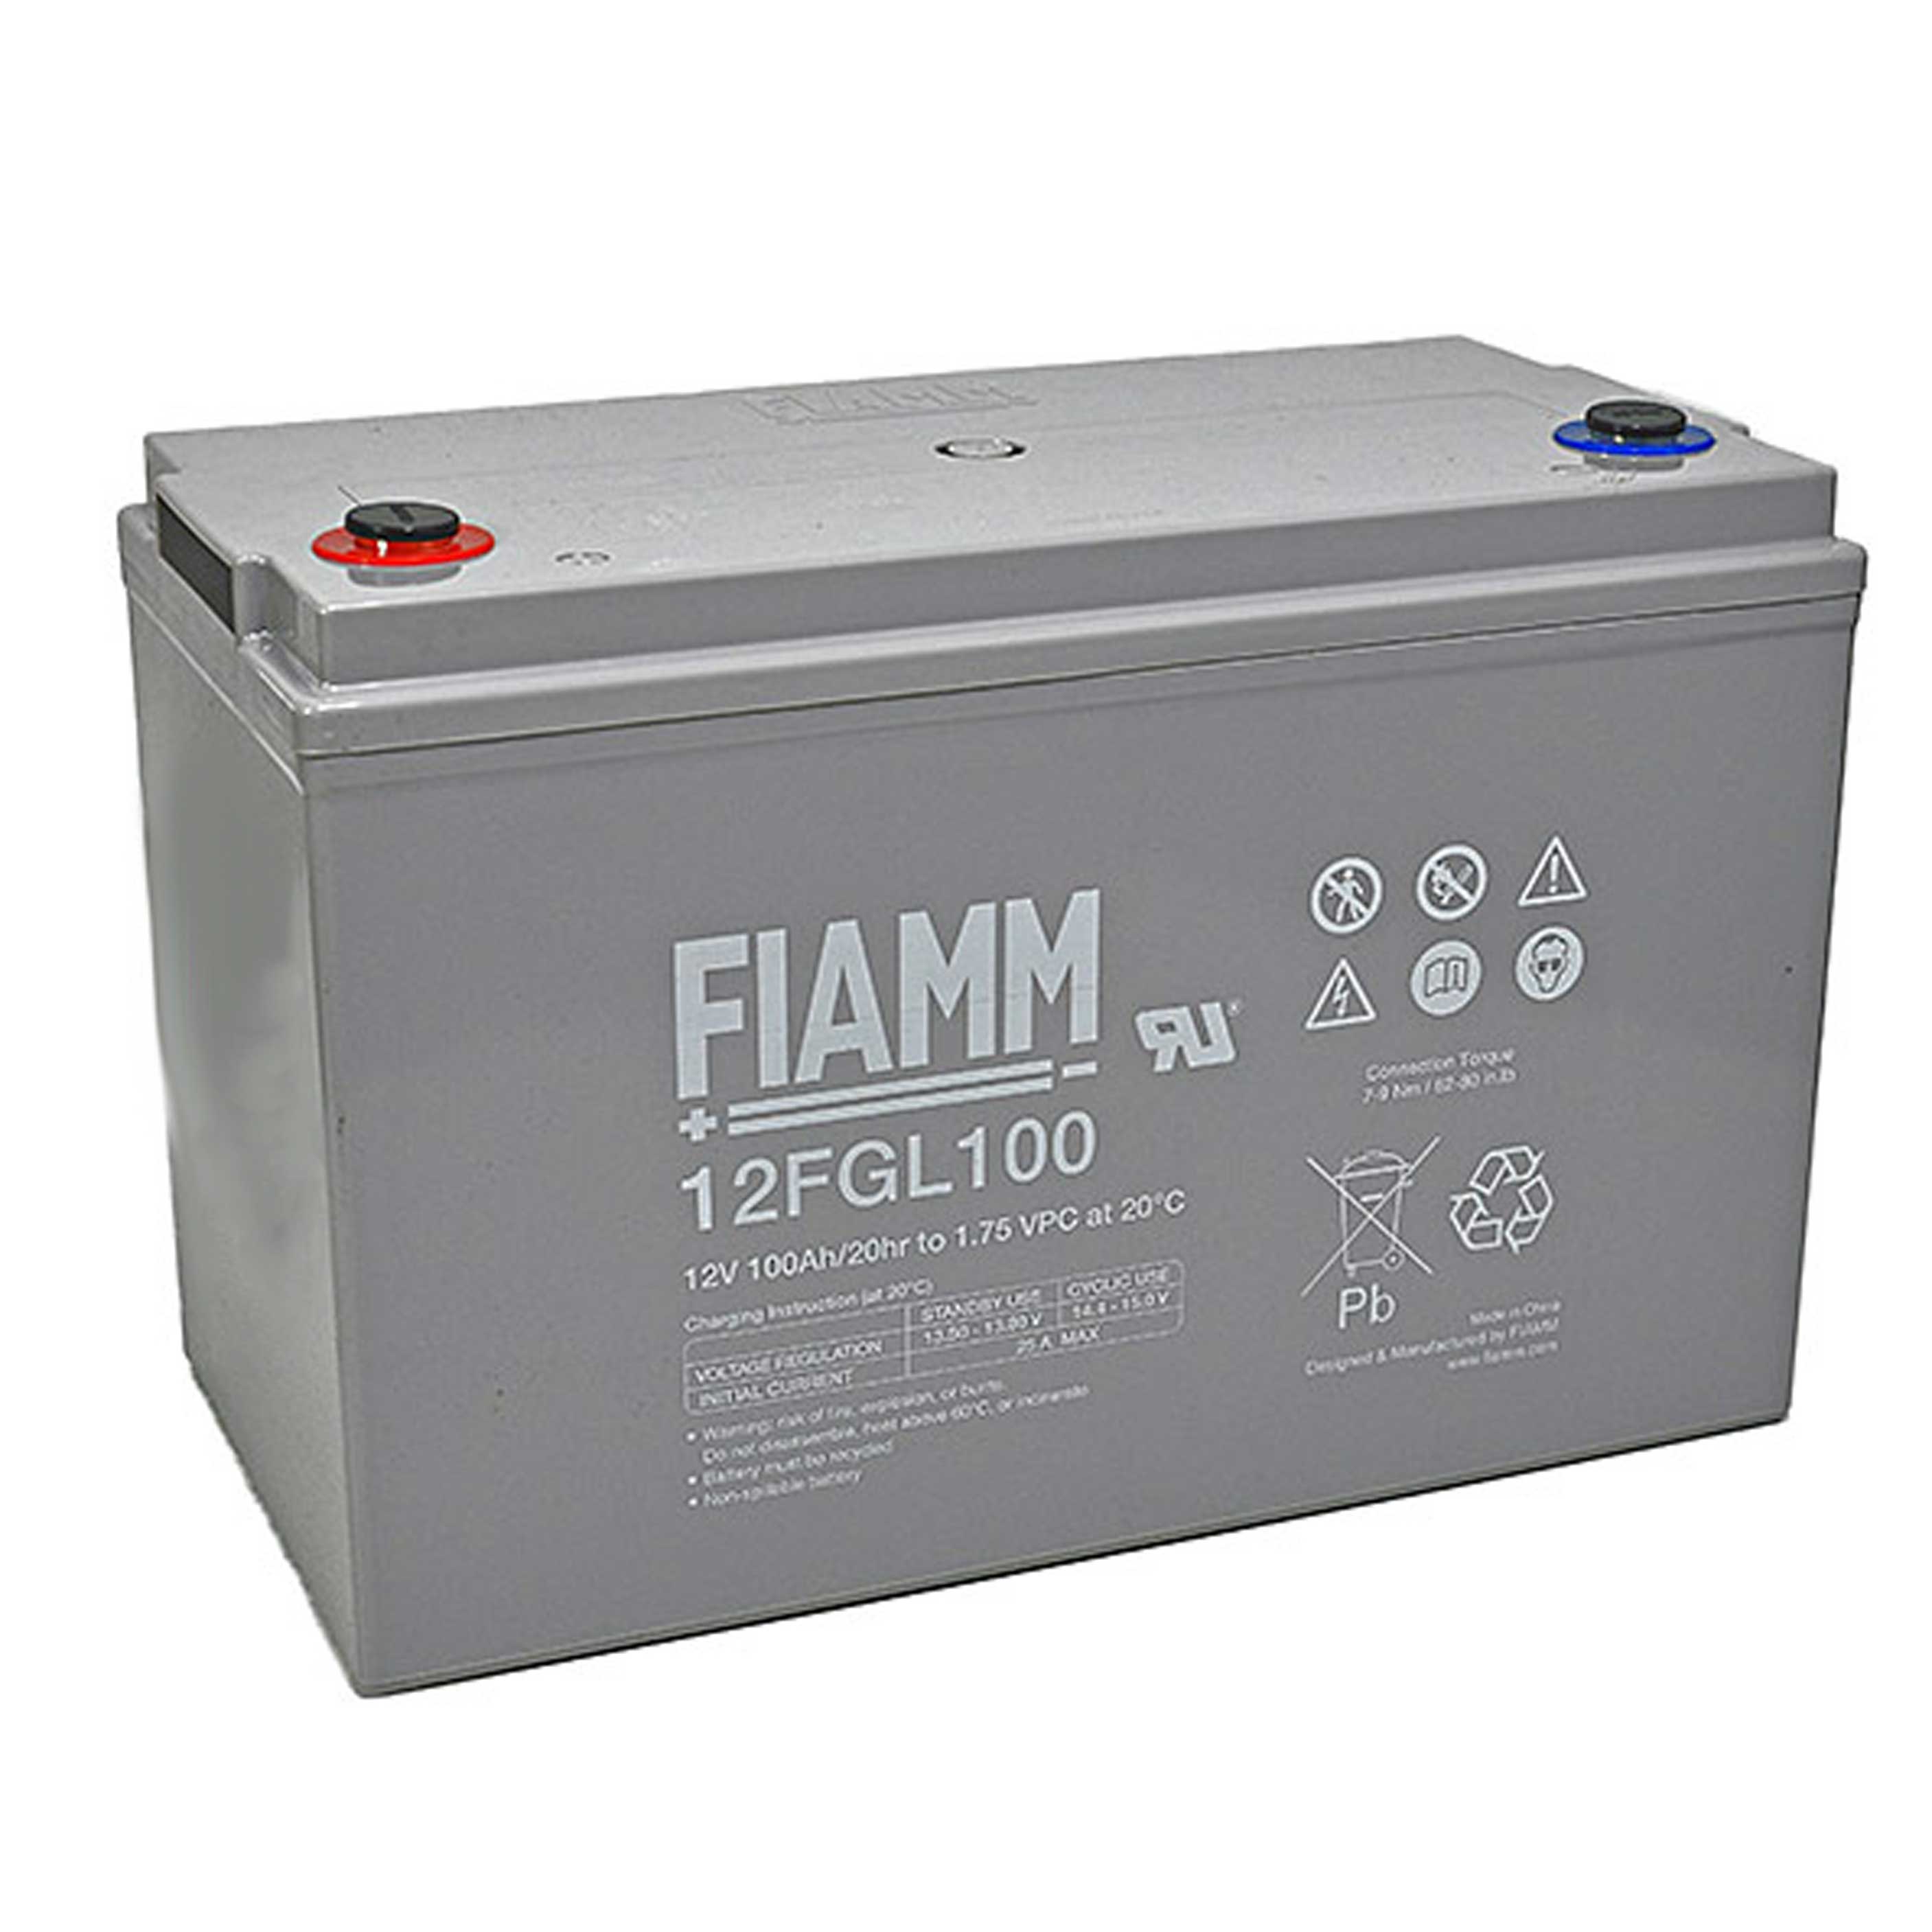 Fiamm 12FGL100 12V 100Ah Blei-Akku / AGM Batterie